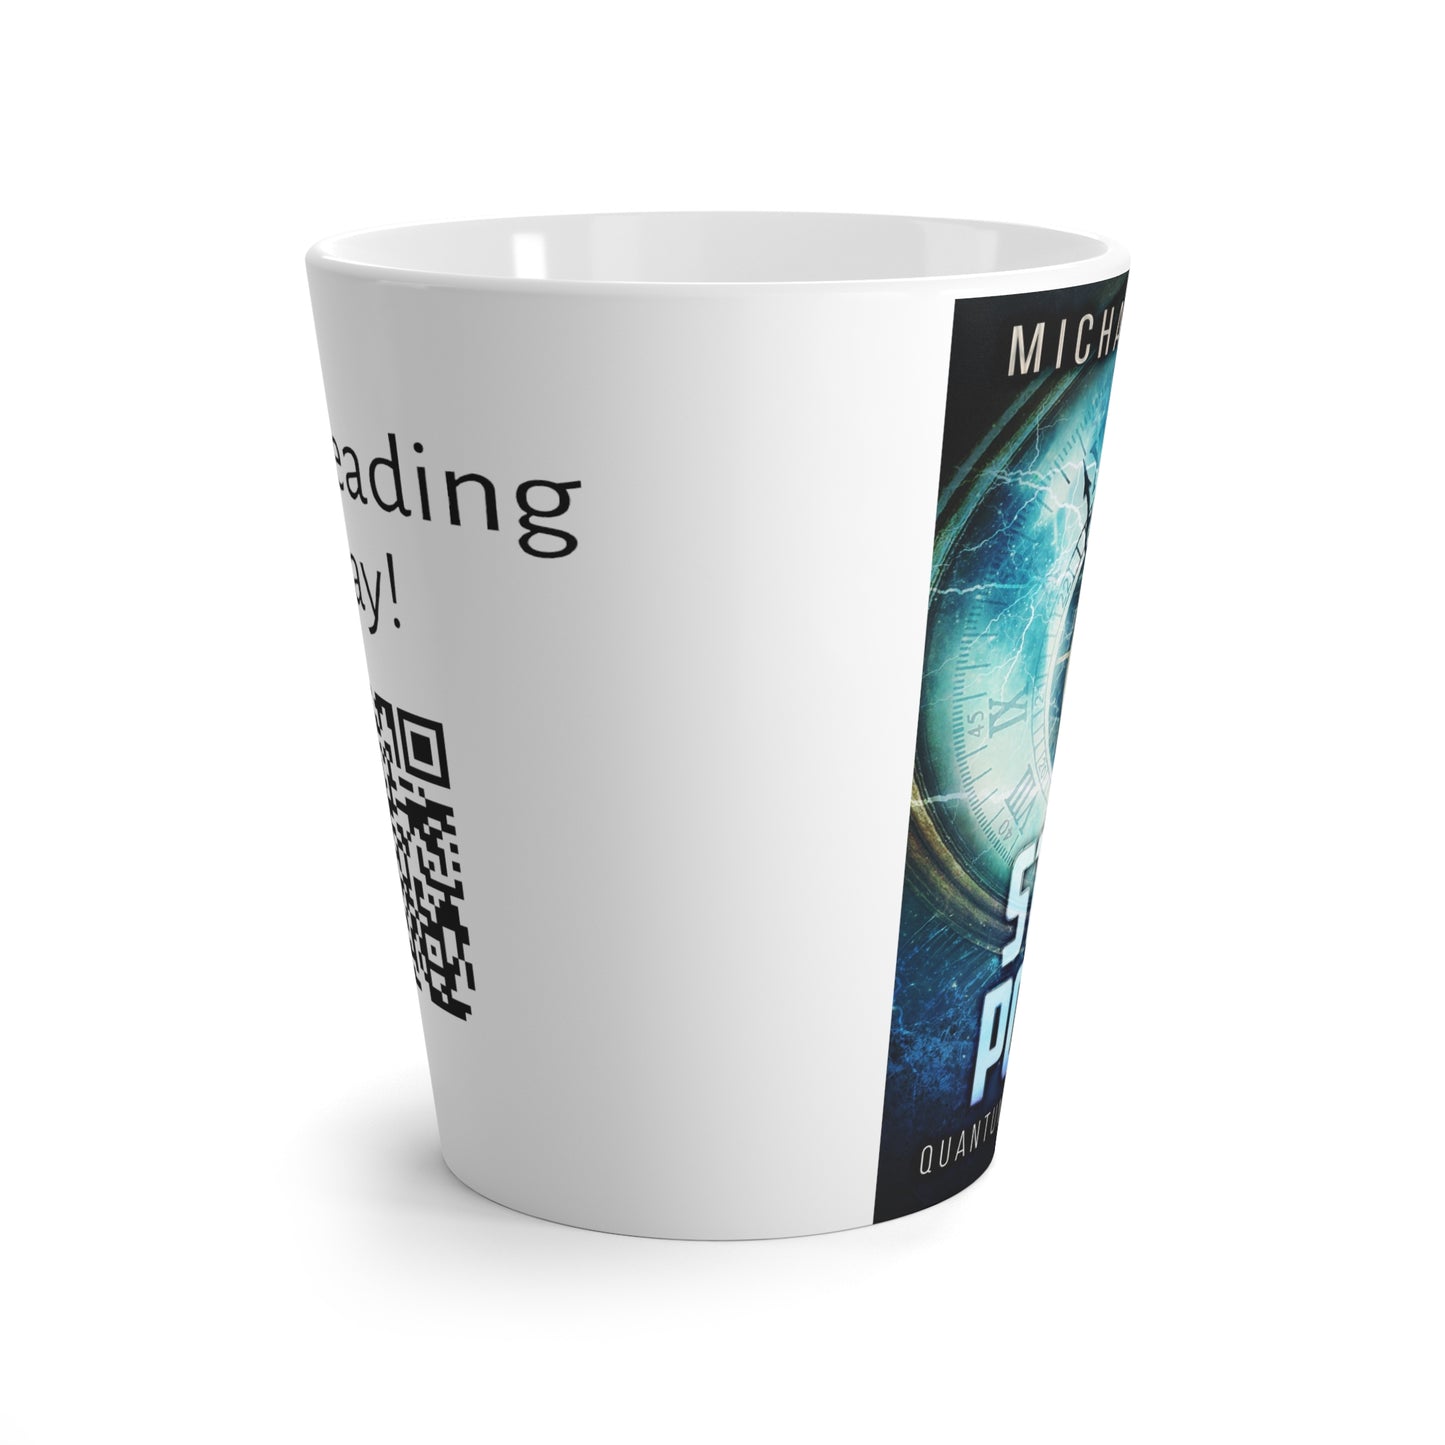 Storm Portal - Latte Mug